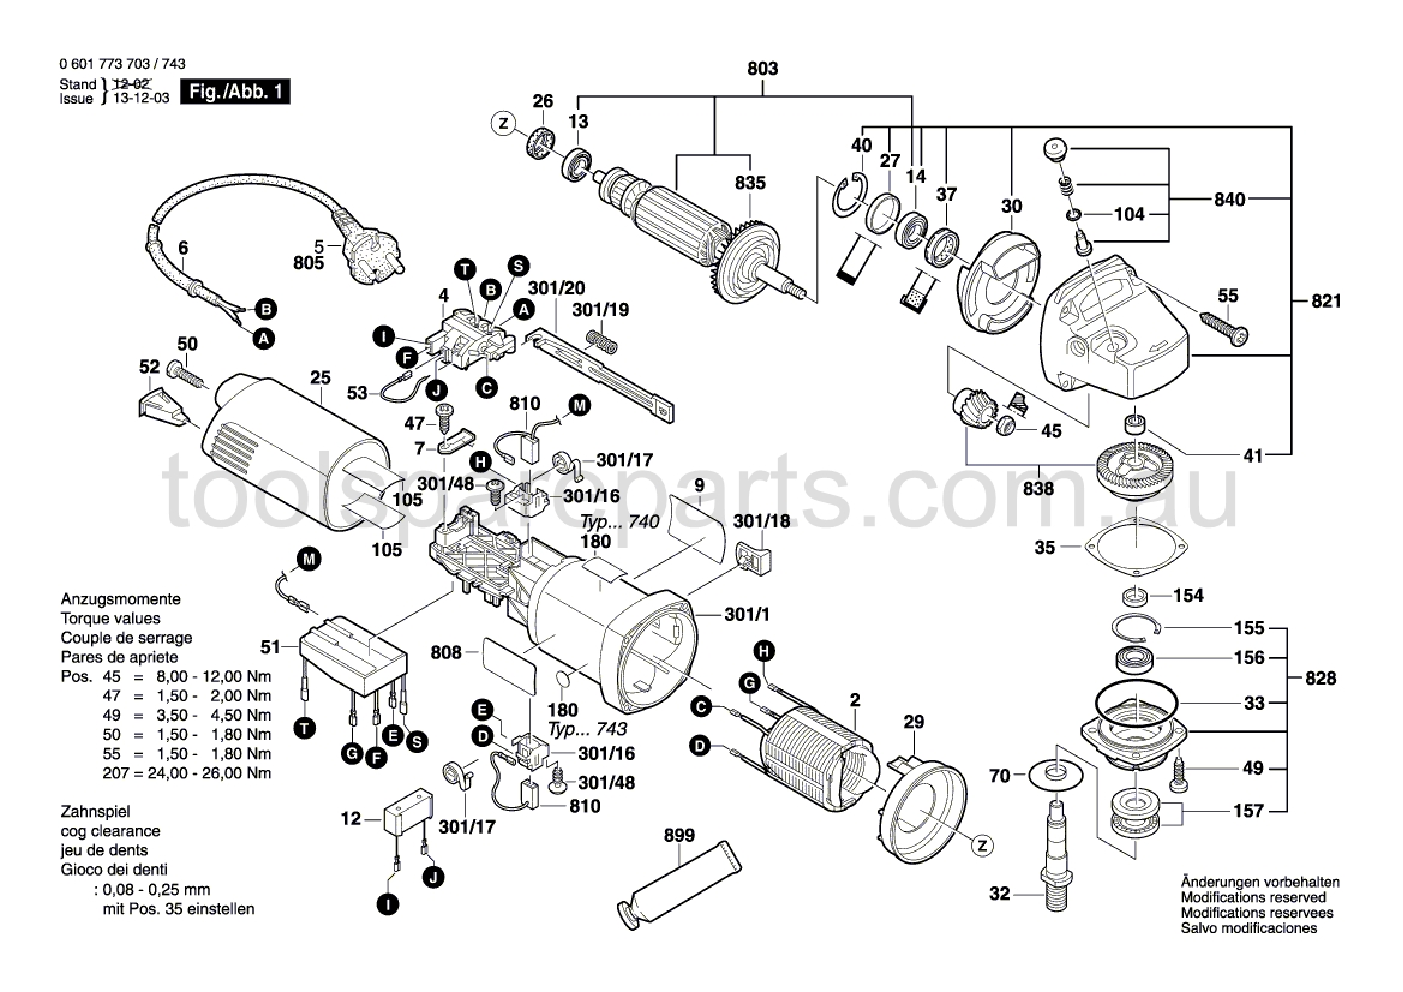 Bosch GBR 14 CA 0601773737  Diagram 1